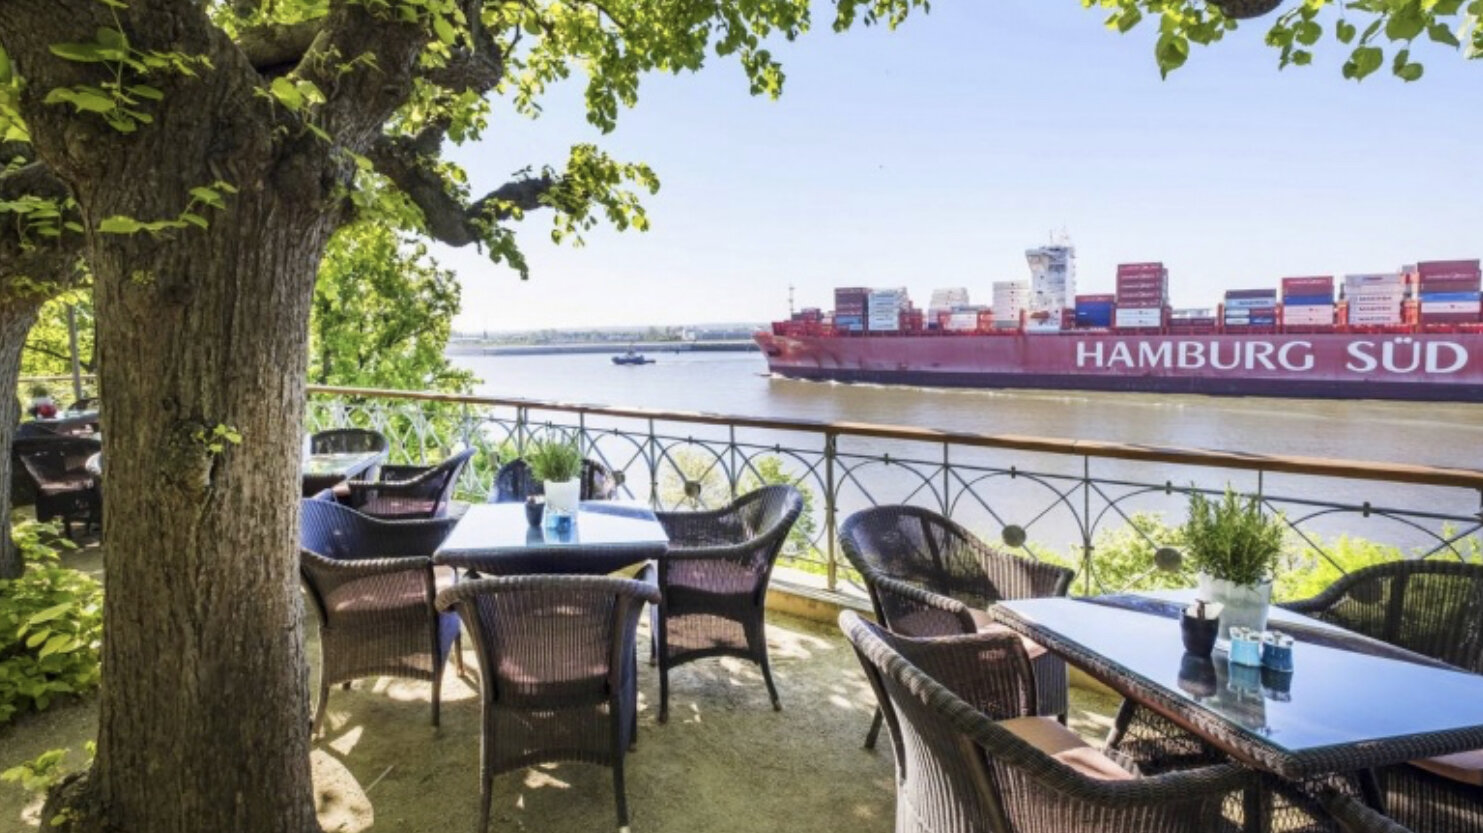 A ship in Hamburg sails past a café.